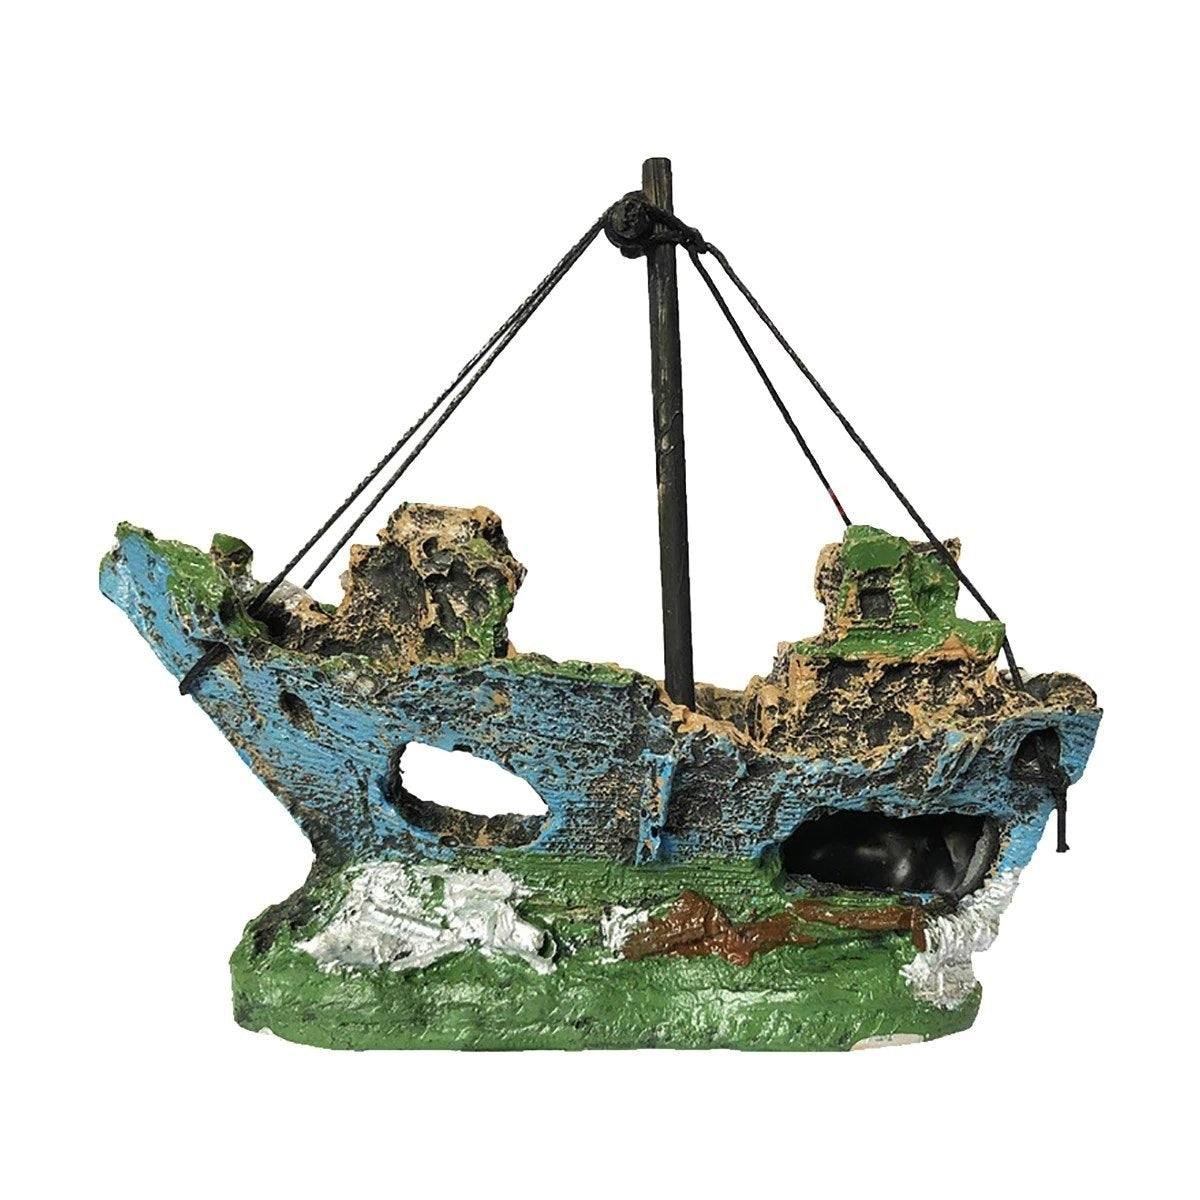 Resin Aquarium Fish Tank Decoration Pirate Shipwreck Ship Wreck Boat A Toys And Educational